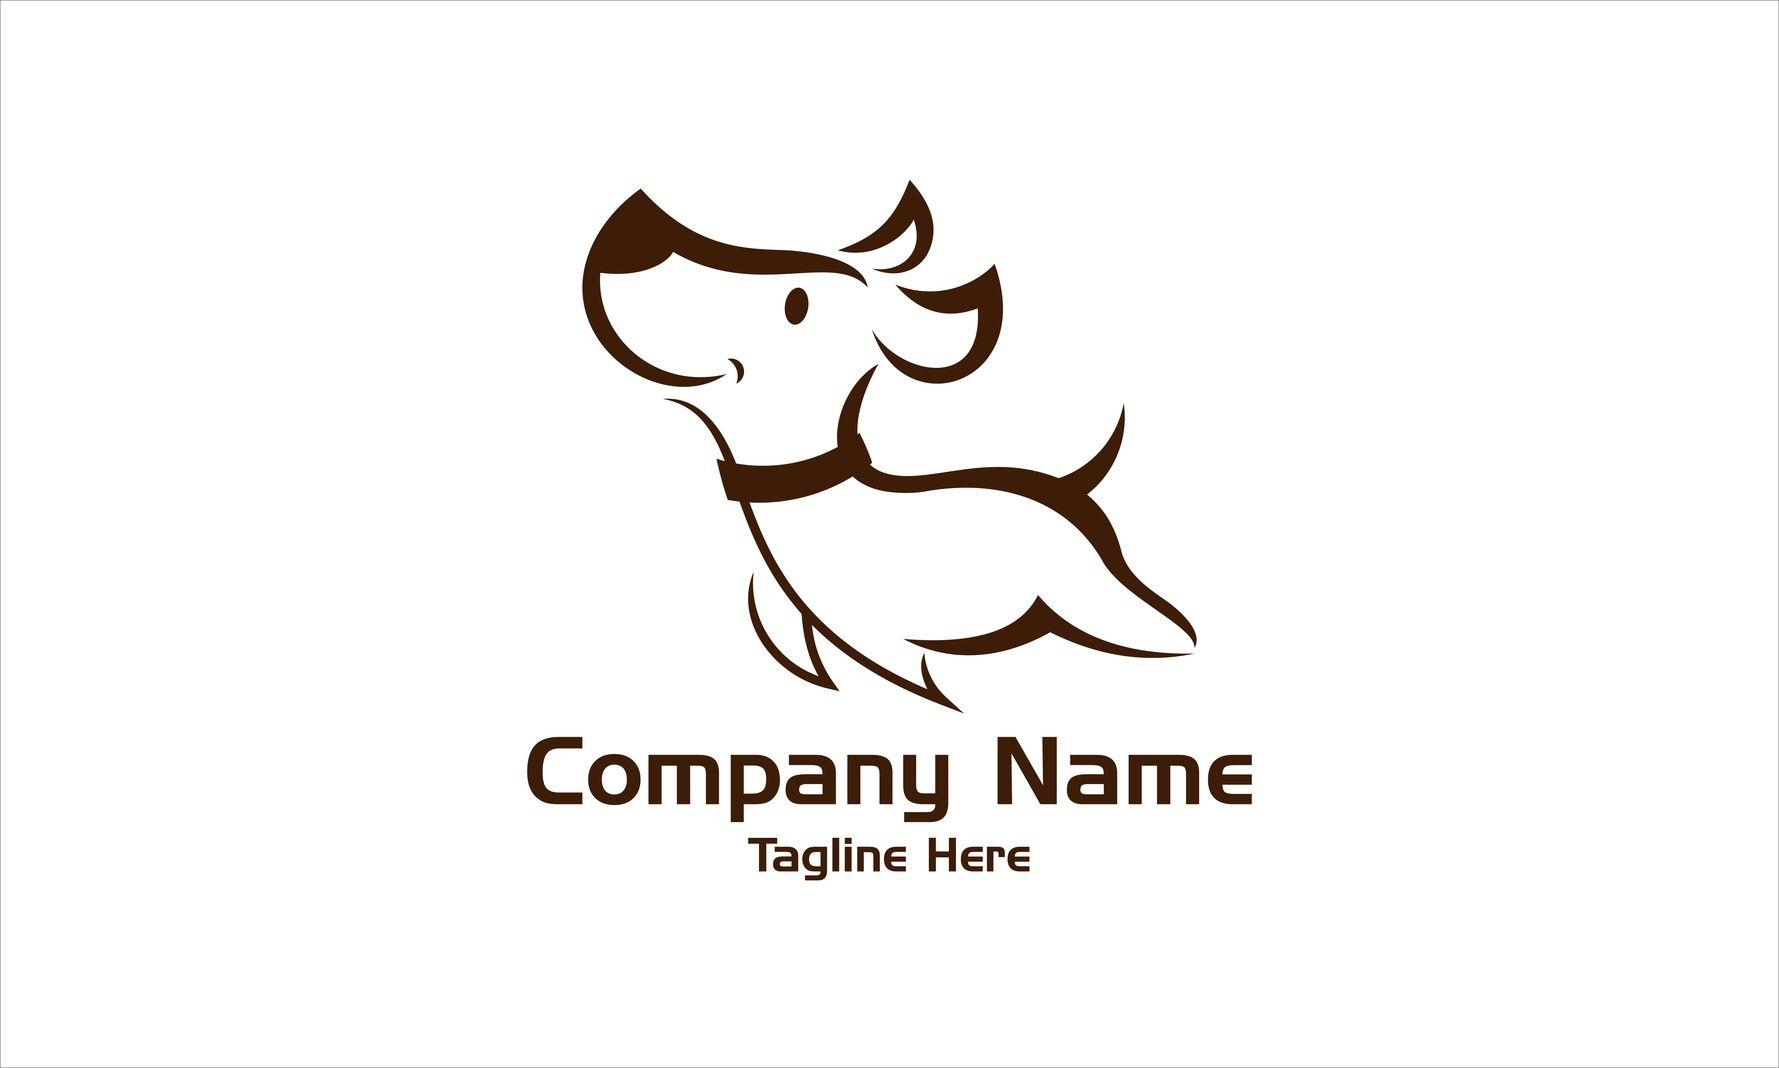 Owner Logo - Elements Of An Eye Catching Pet Store Logo • Online Logo Maker's Blog